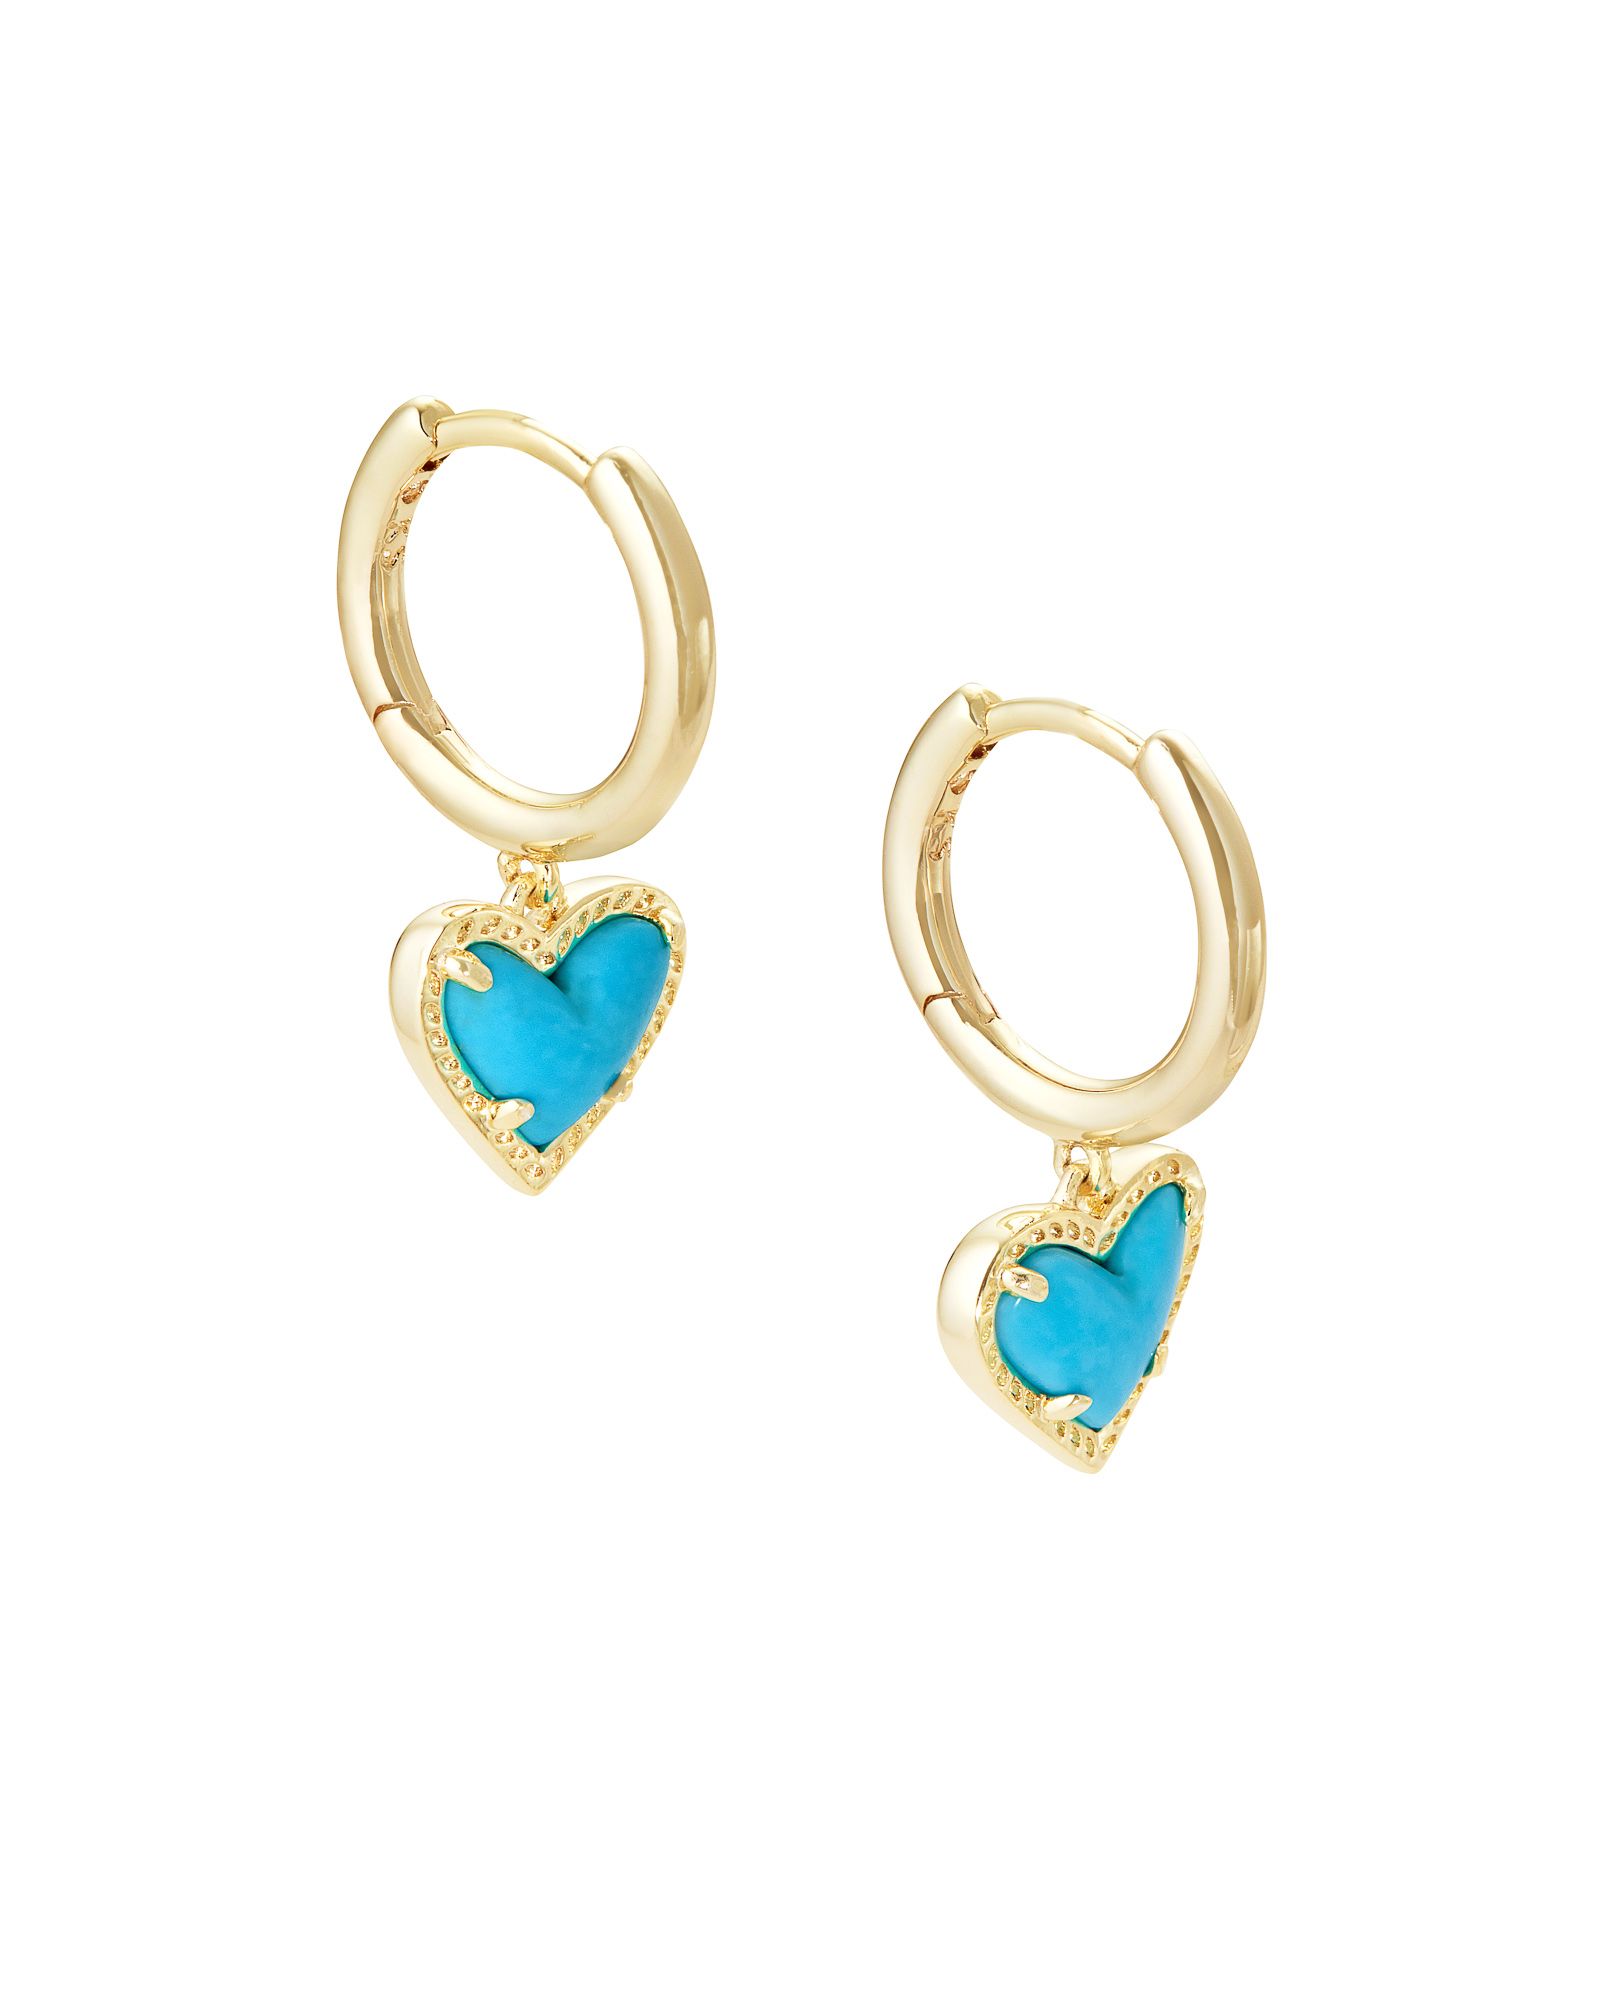 Ari Heart Gold Huggie Earrings in Turquoise Magnesite | Kendra Scott